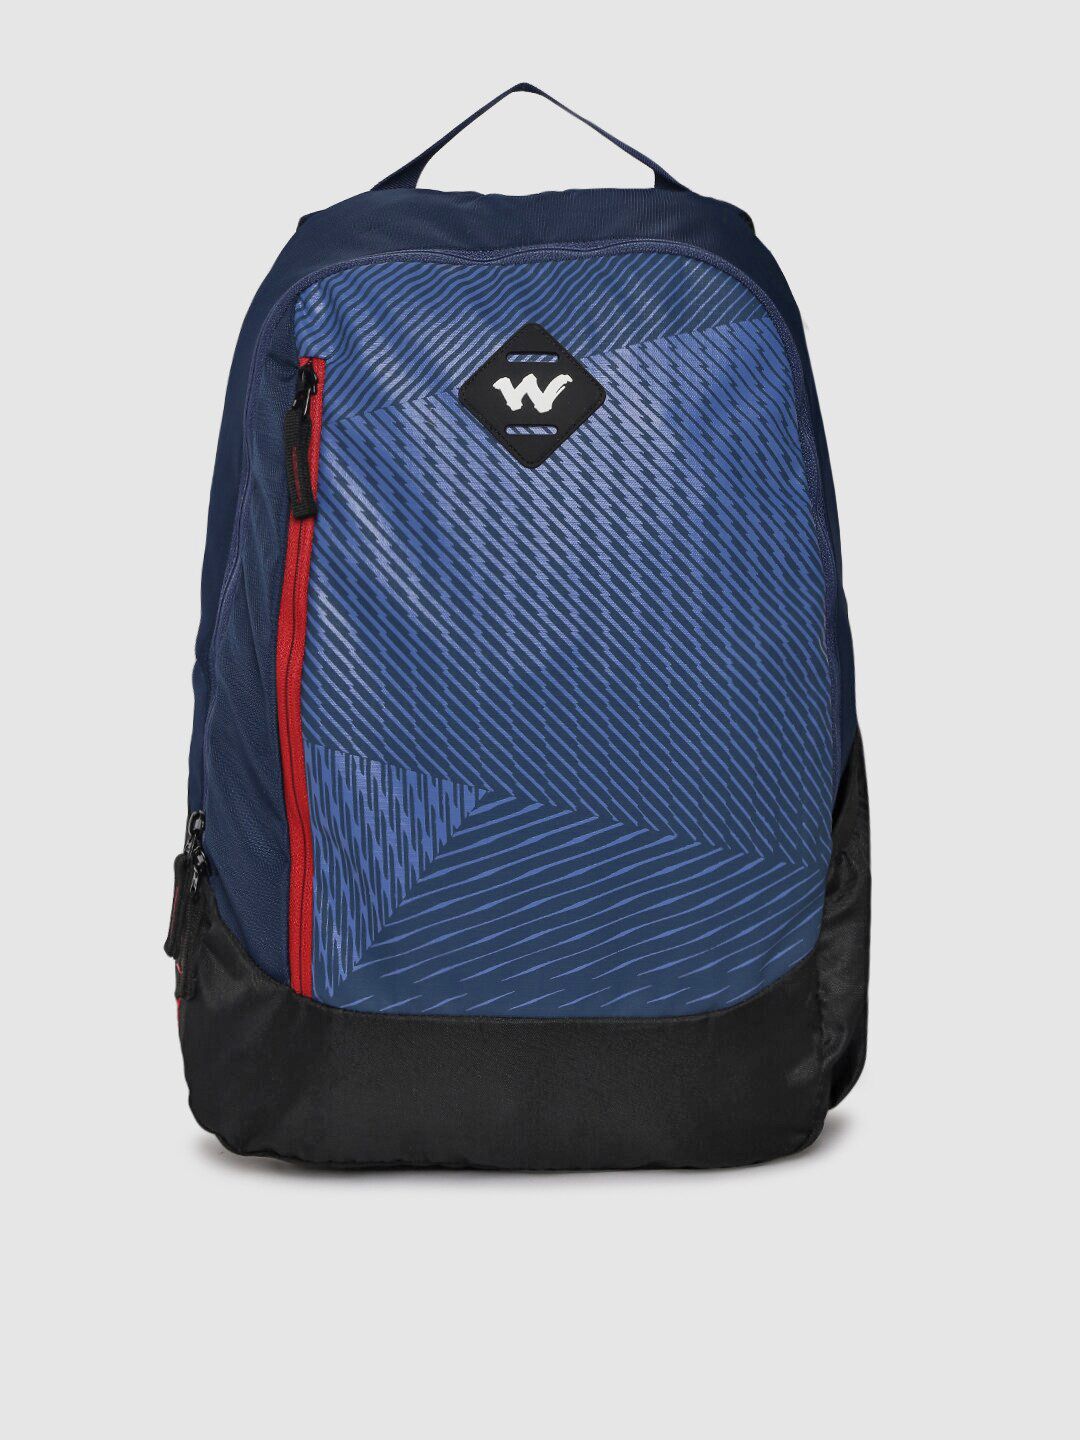 Wildcraft Unisex Blue Printed Backpack Price in India